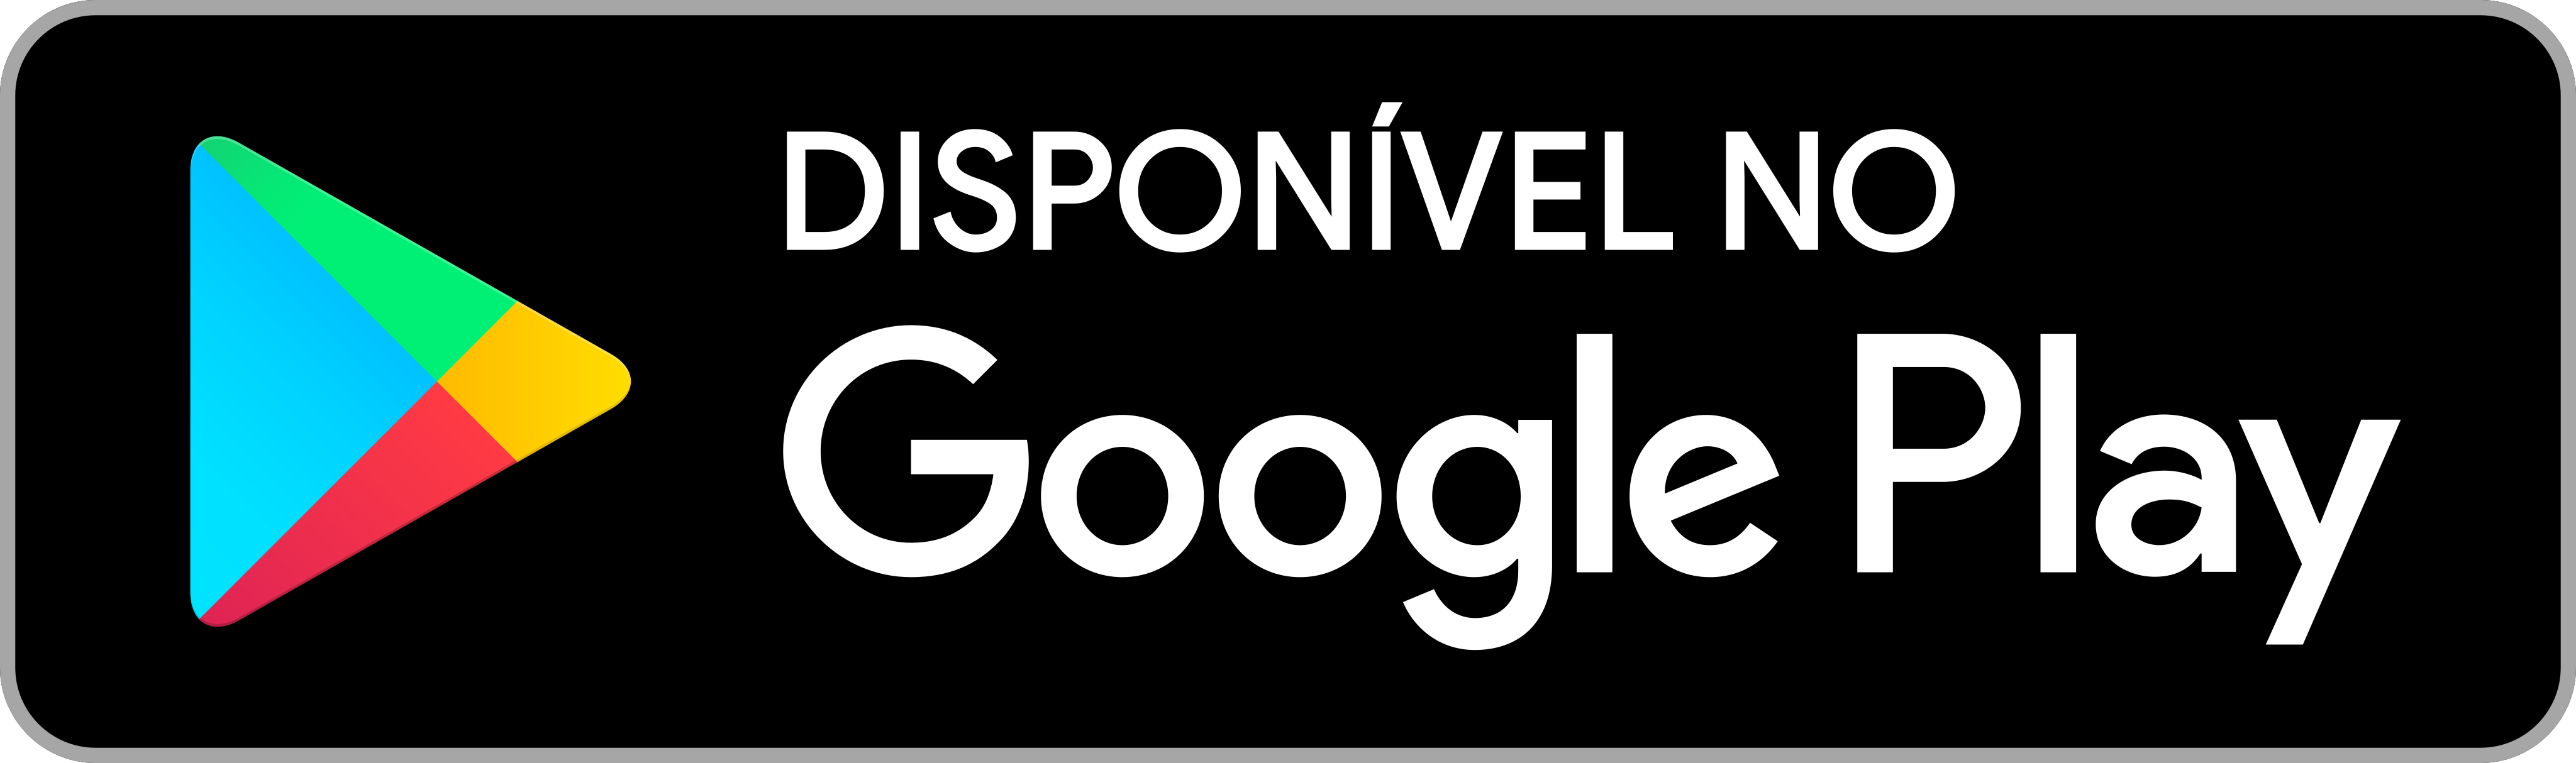 disponivel-google-play-badge.png